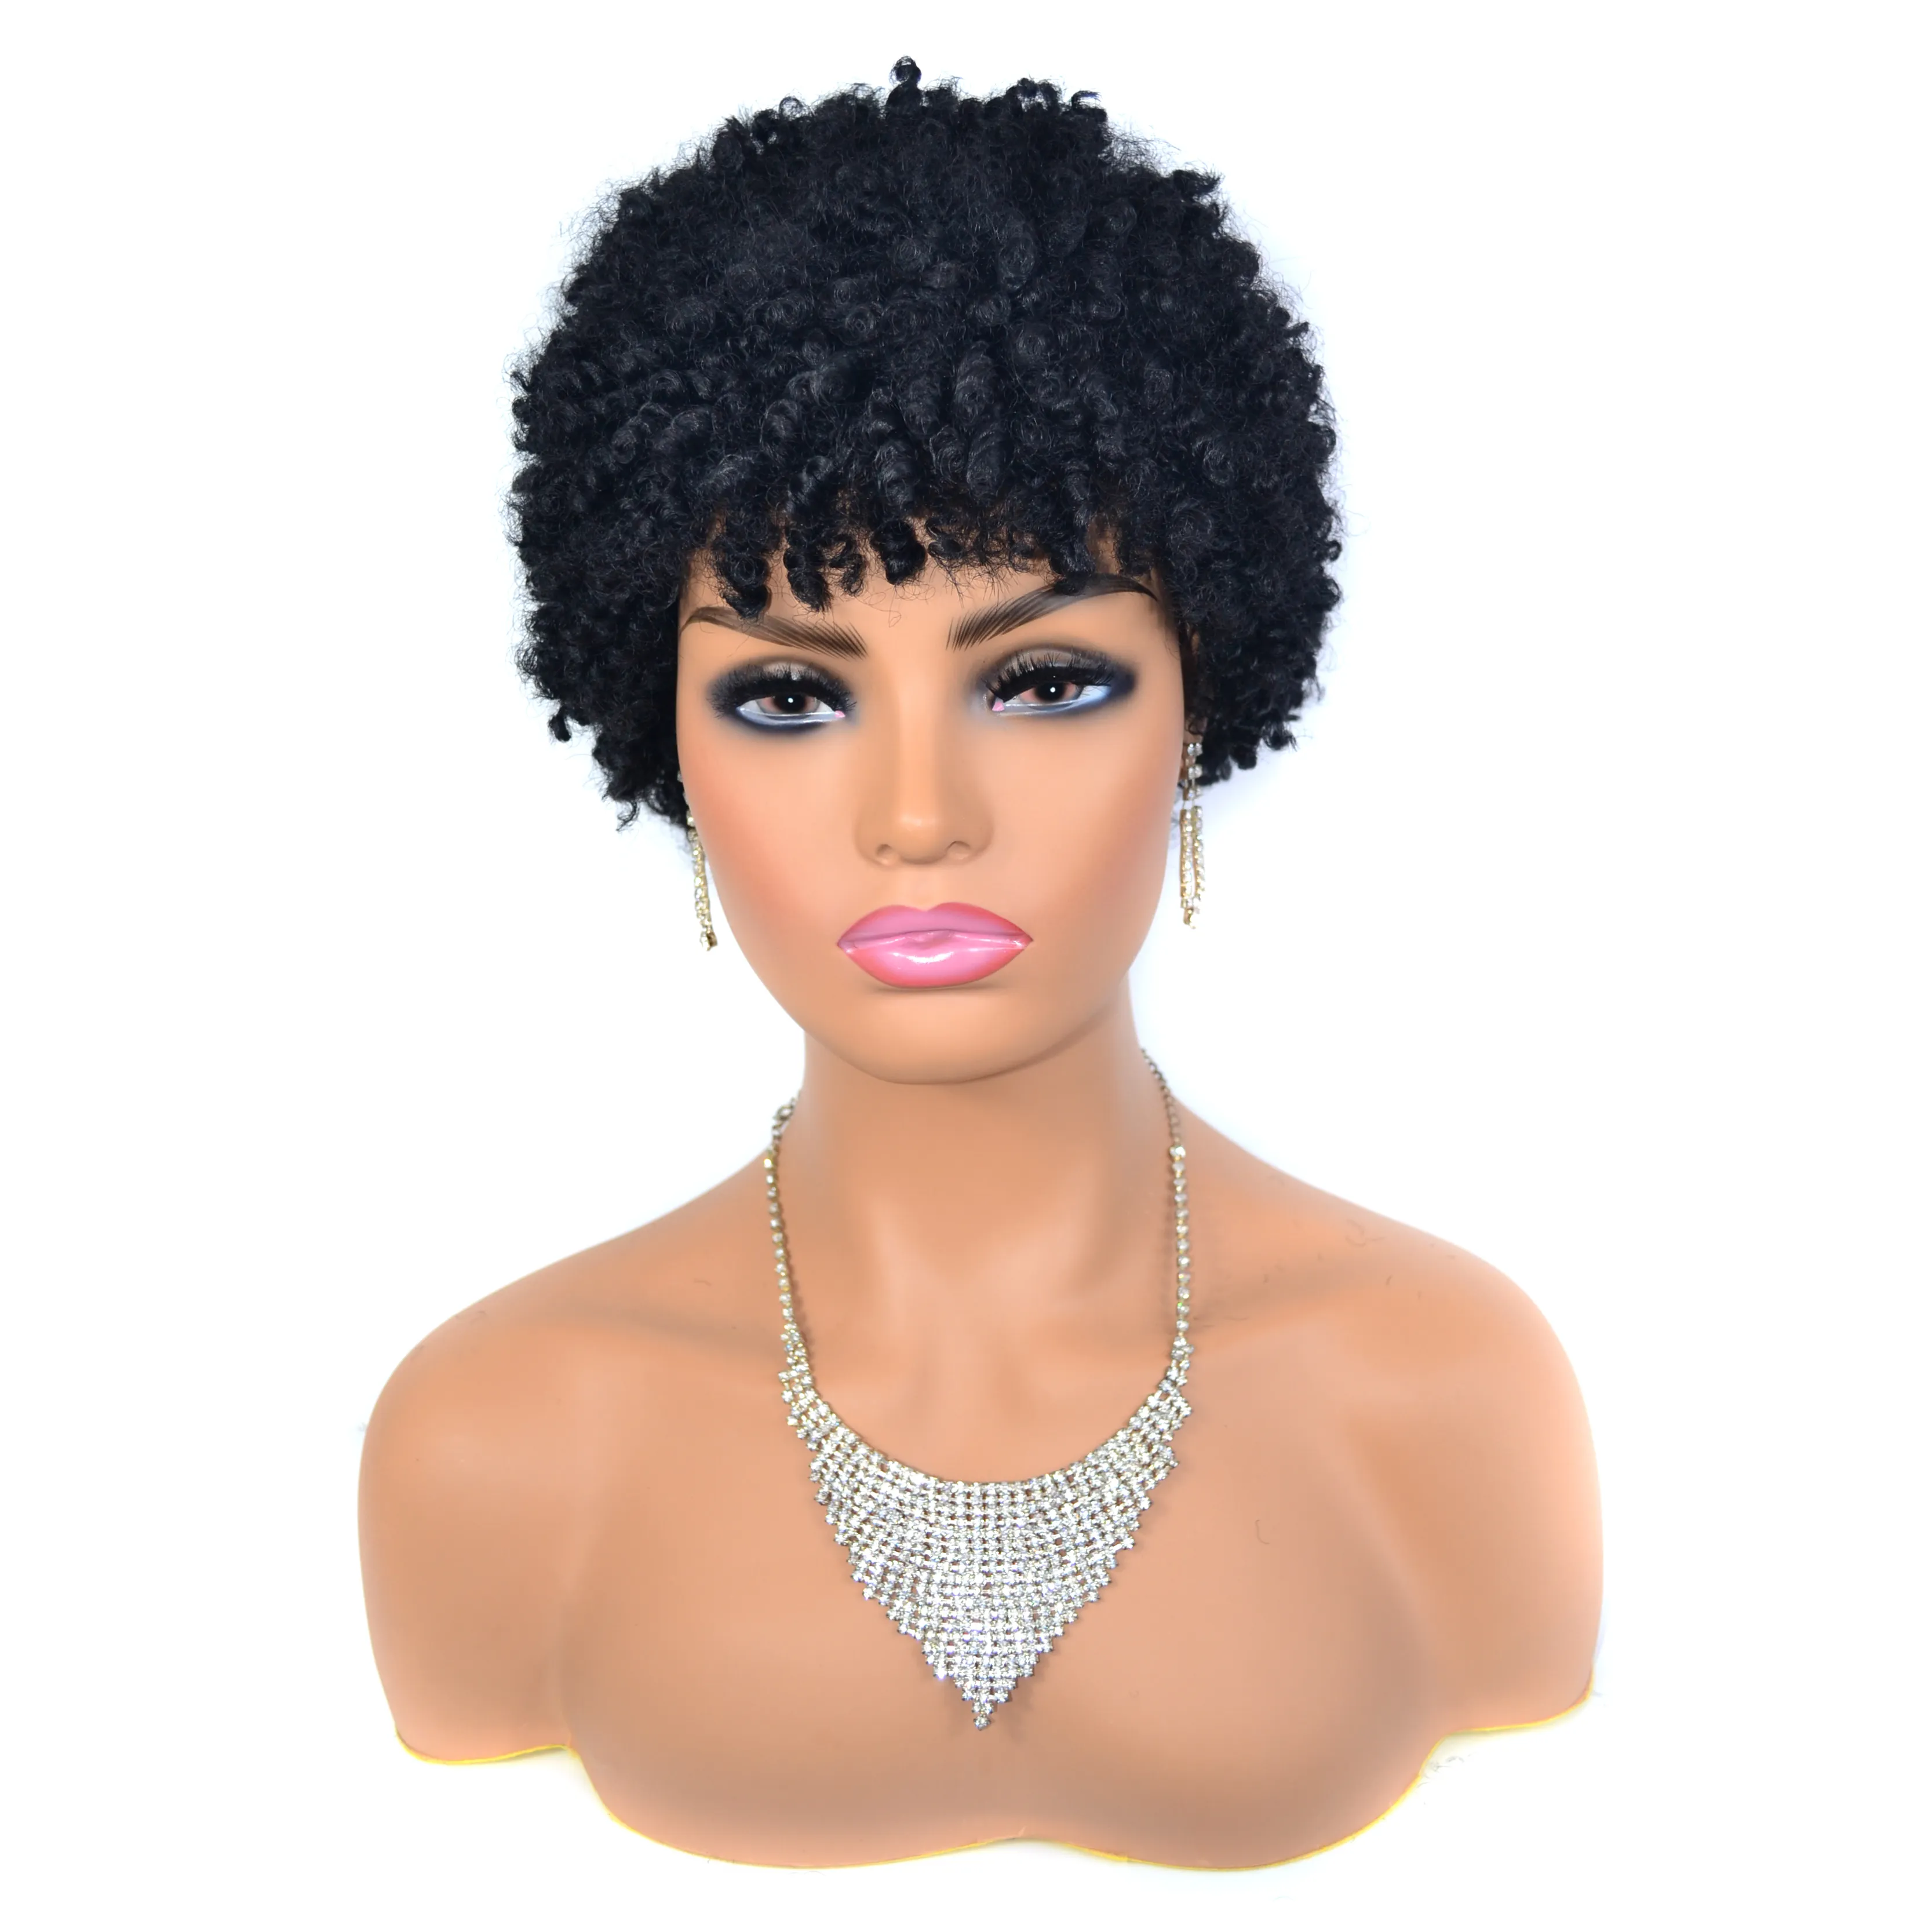 Pelucas rizadas cortas para mujeres negras, pelo humano corto con corte Pixie, sin encaje, hechas a máquina, Color negro, brasileño